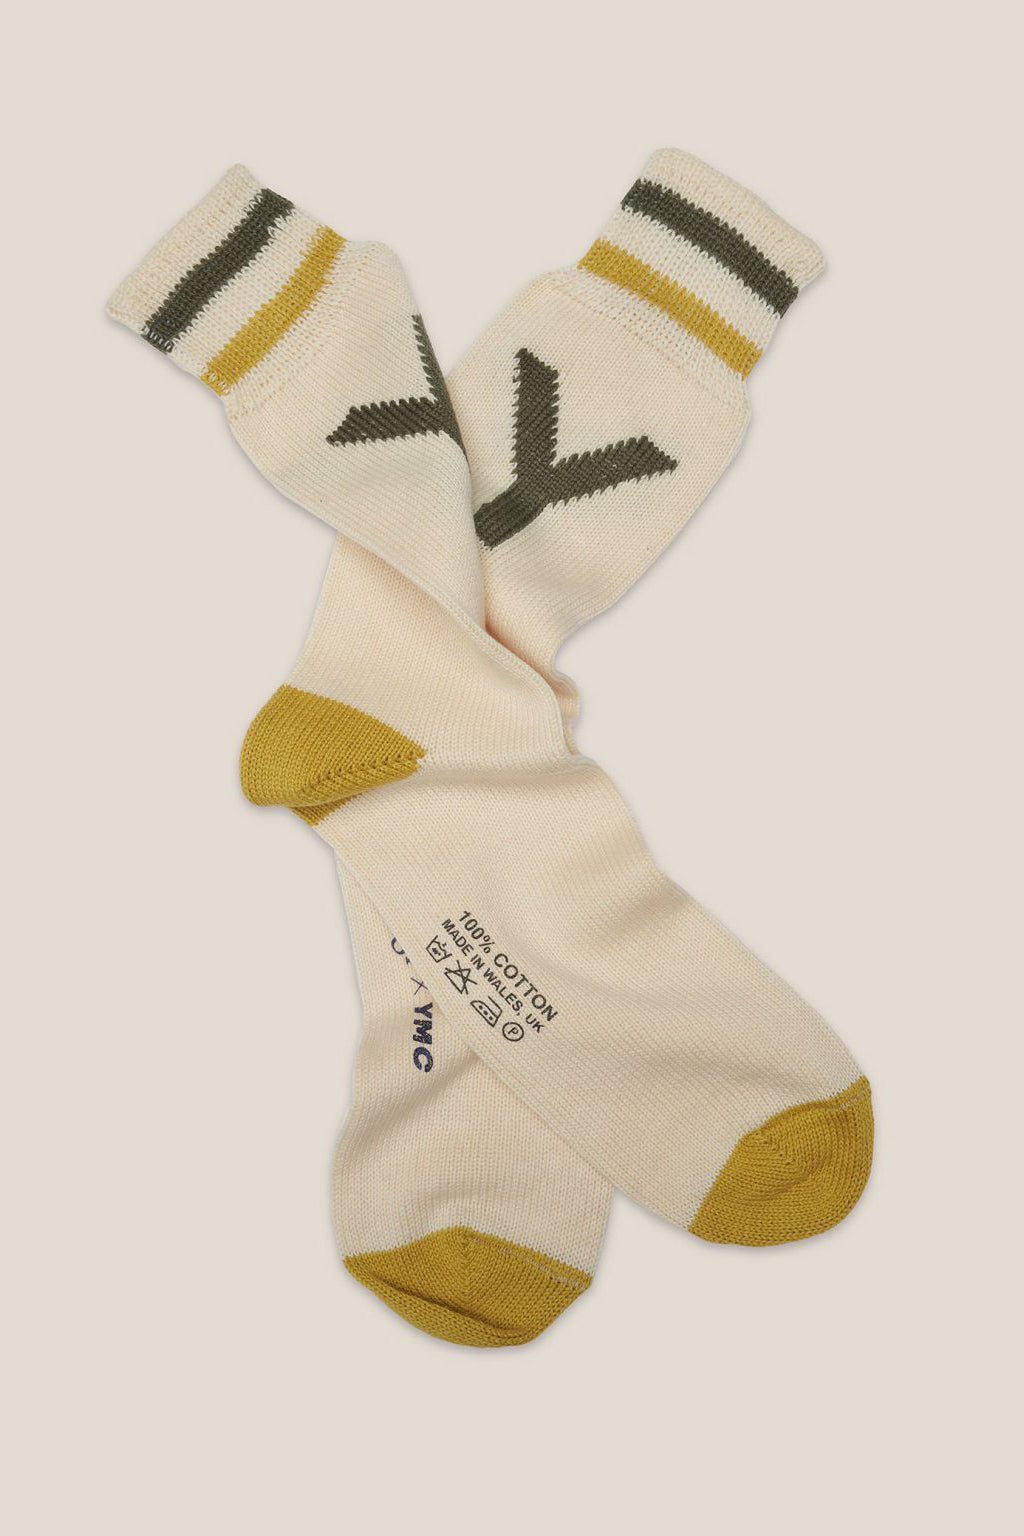 Y motif sock green yellow